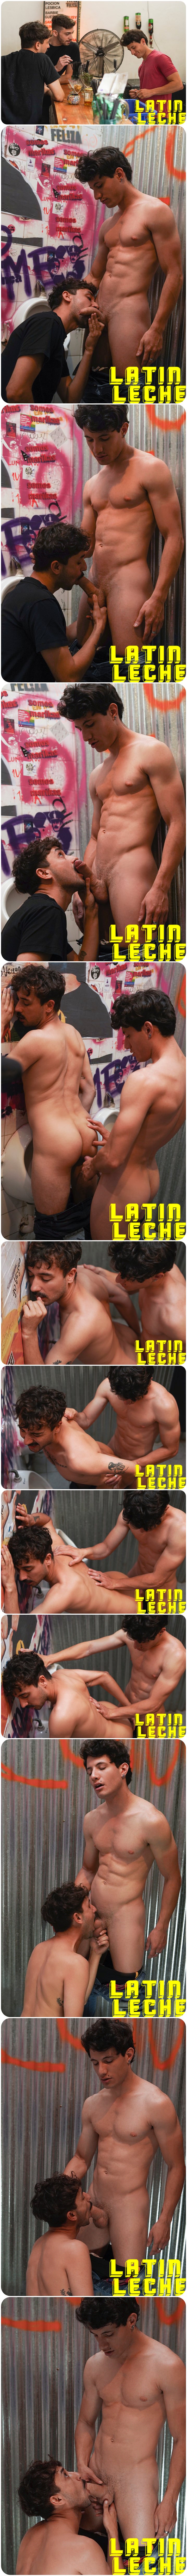 Latin Leche